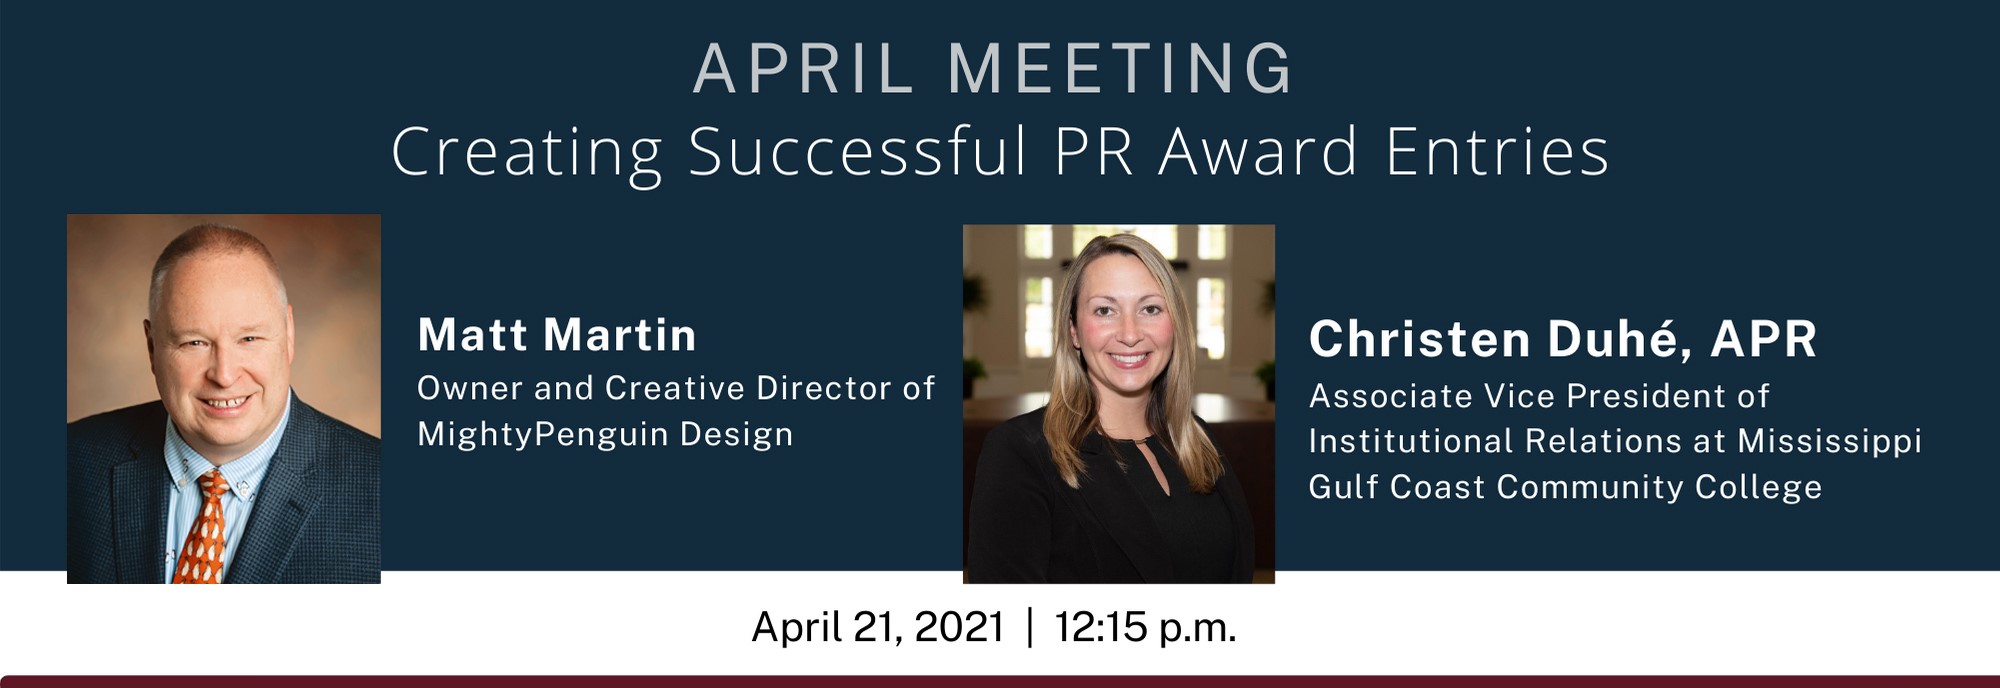 Starkville-MSU PRAM graphic for "Creating Successful PR Award Entries" meeting on April 21, 2021